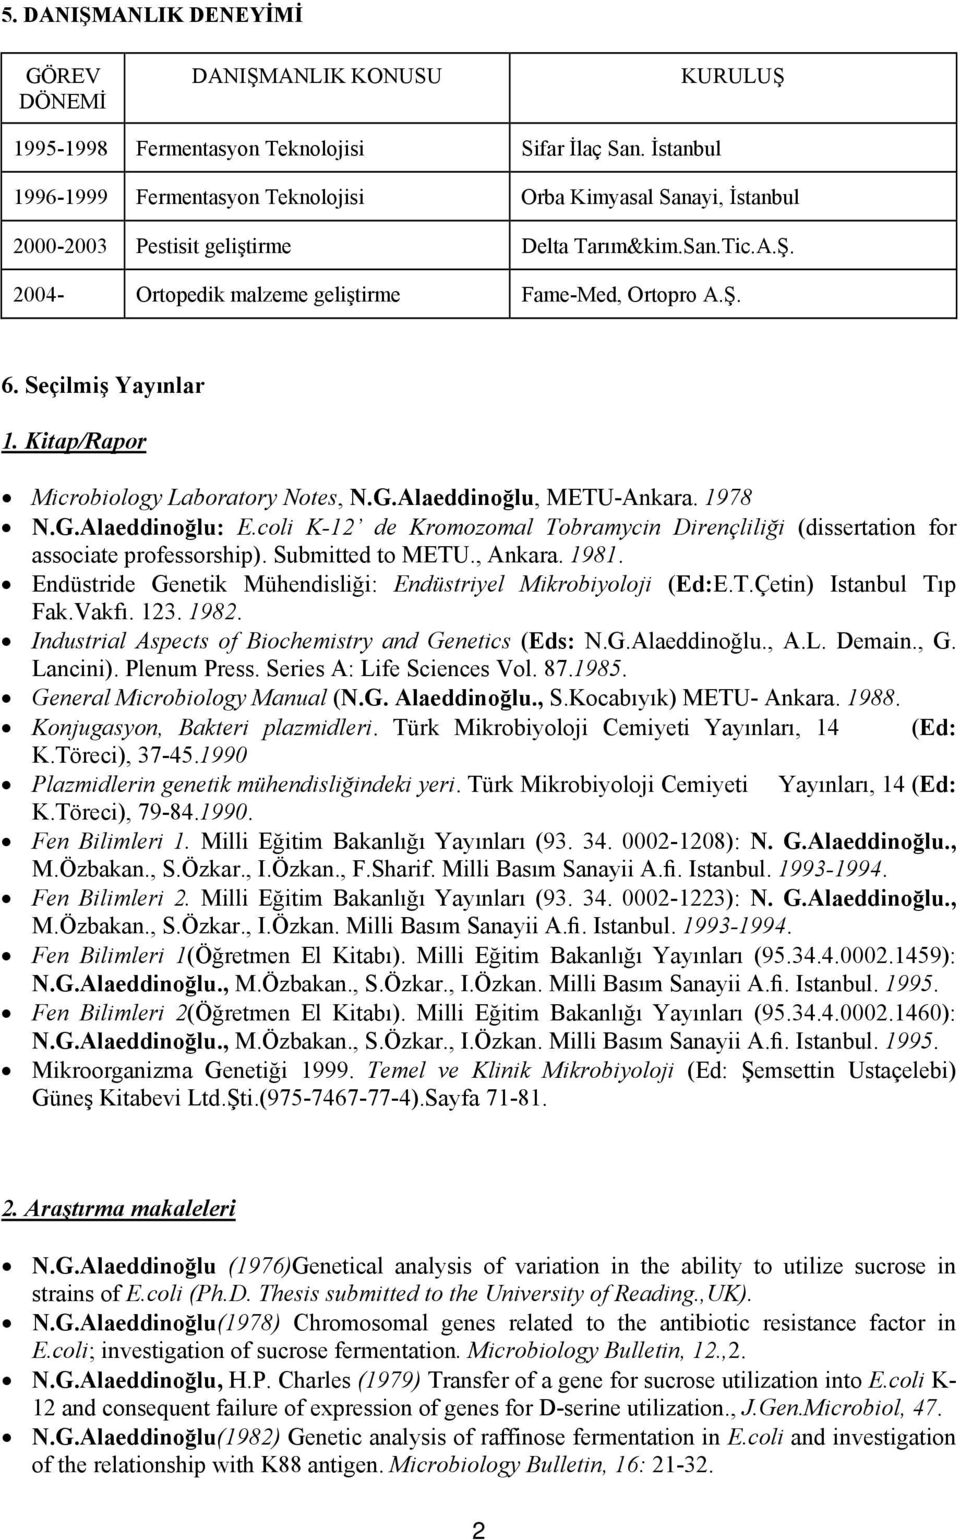 Seçilmiş Yayınlar 1. Kitap/Rapor Microbiology Laboratory Notes, N.G.Alaeddinoğlu, METU-Ankara. 1978 N.G.Alaeddinoğlu: E.